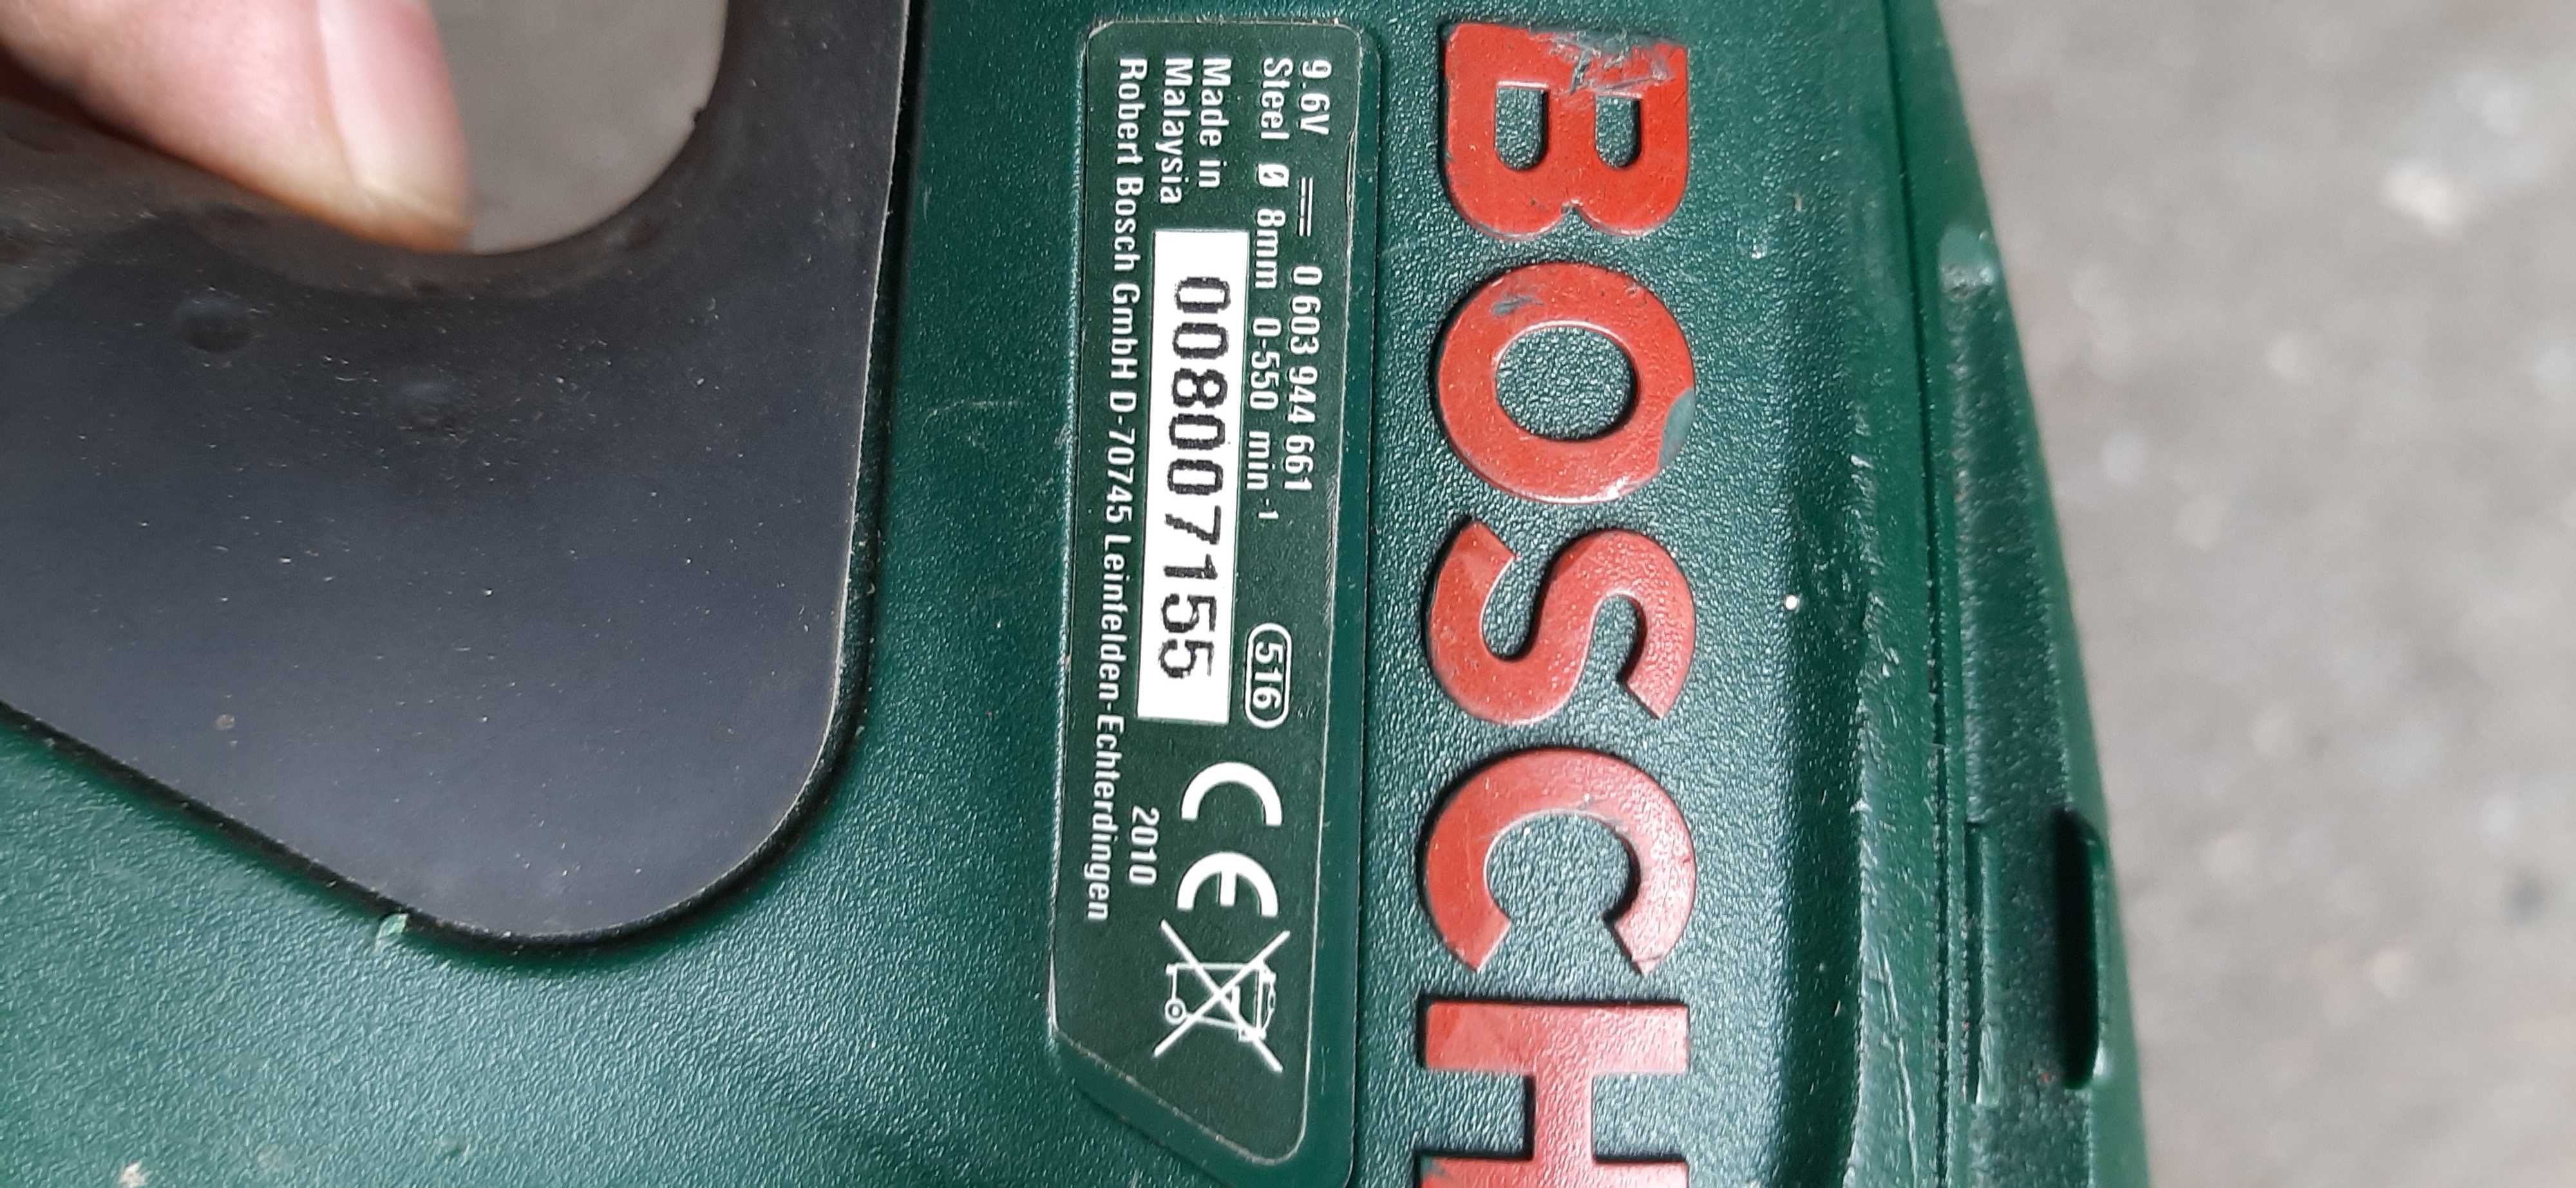 Wkrętarka Bosch Psr 96 walizka 9.6V sprawna